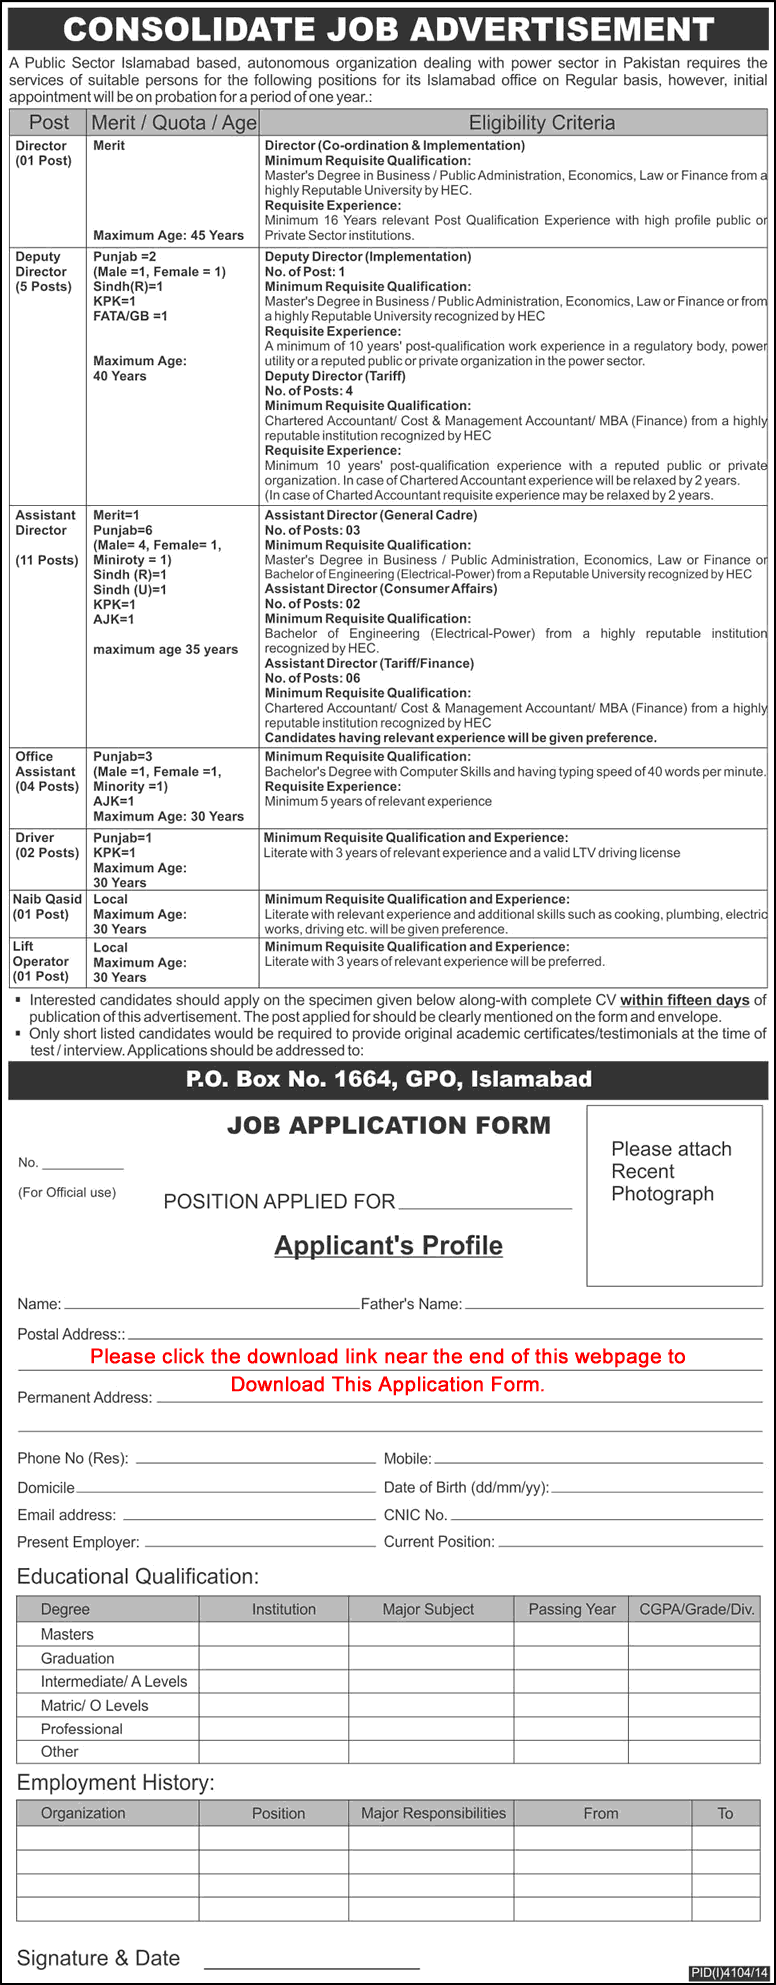 PO Box 1664 GPO Islamabad Jobs 2015 February NEPRA Application Form Download Latest